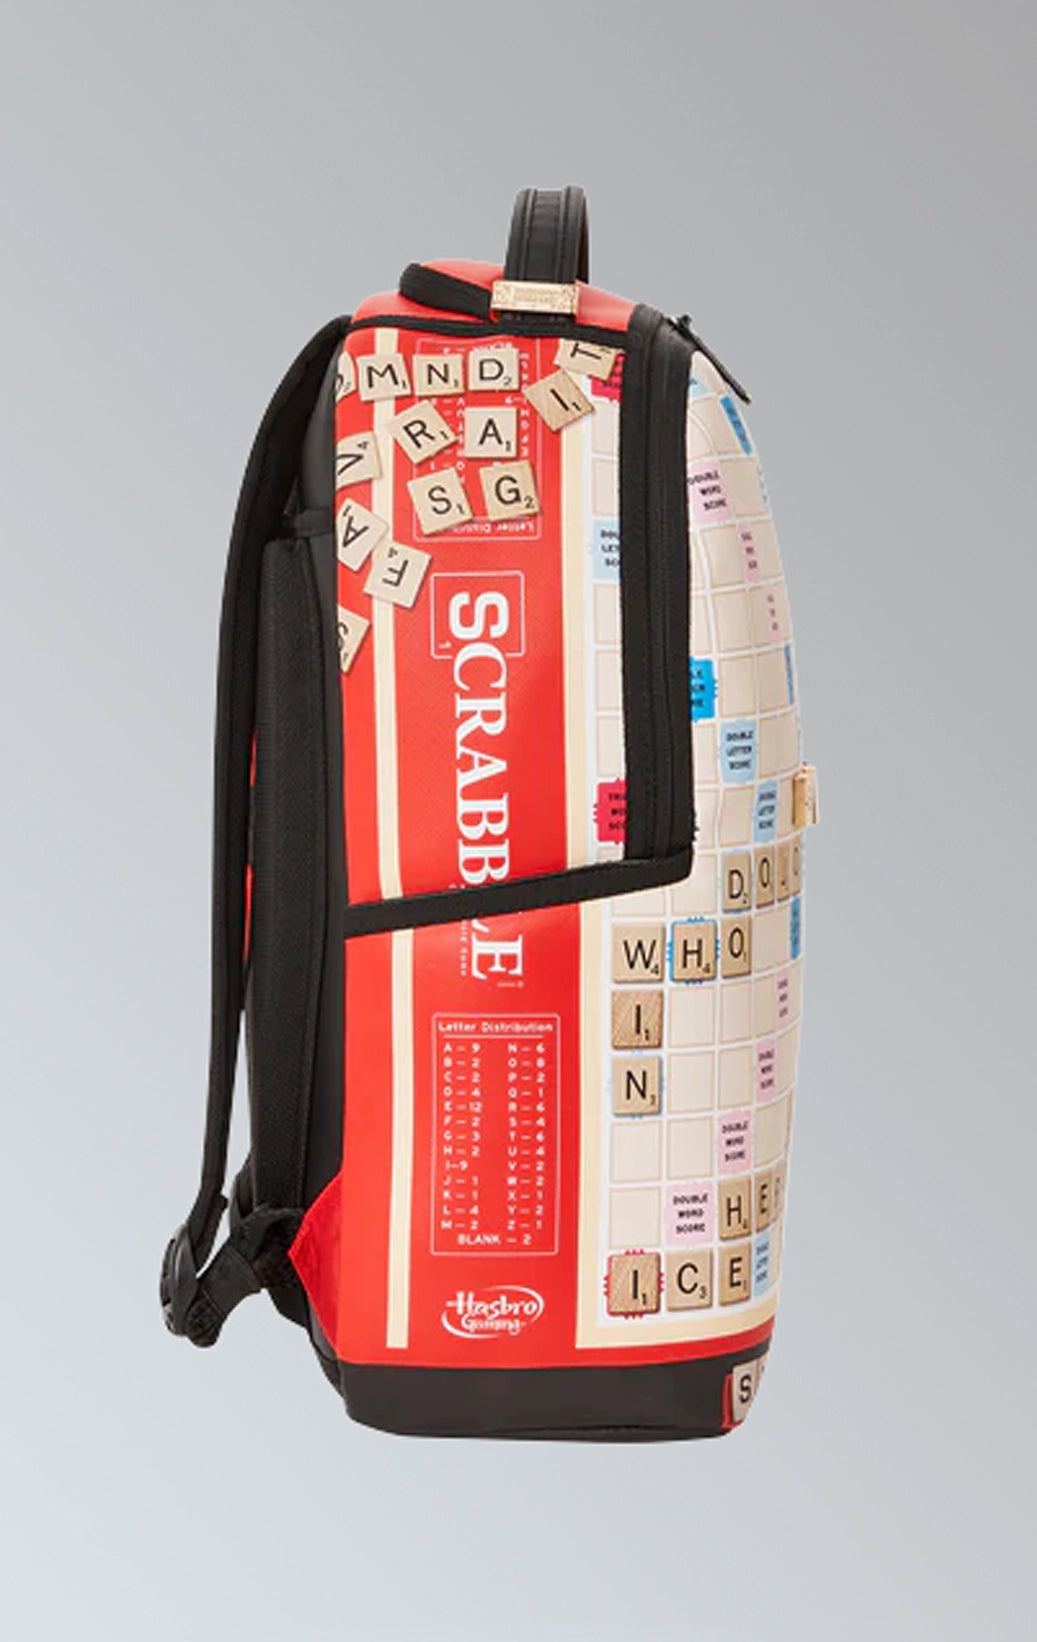 Sprayground Scrabble backpack